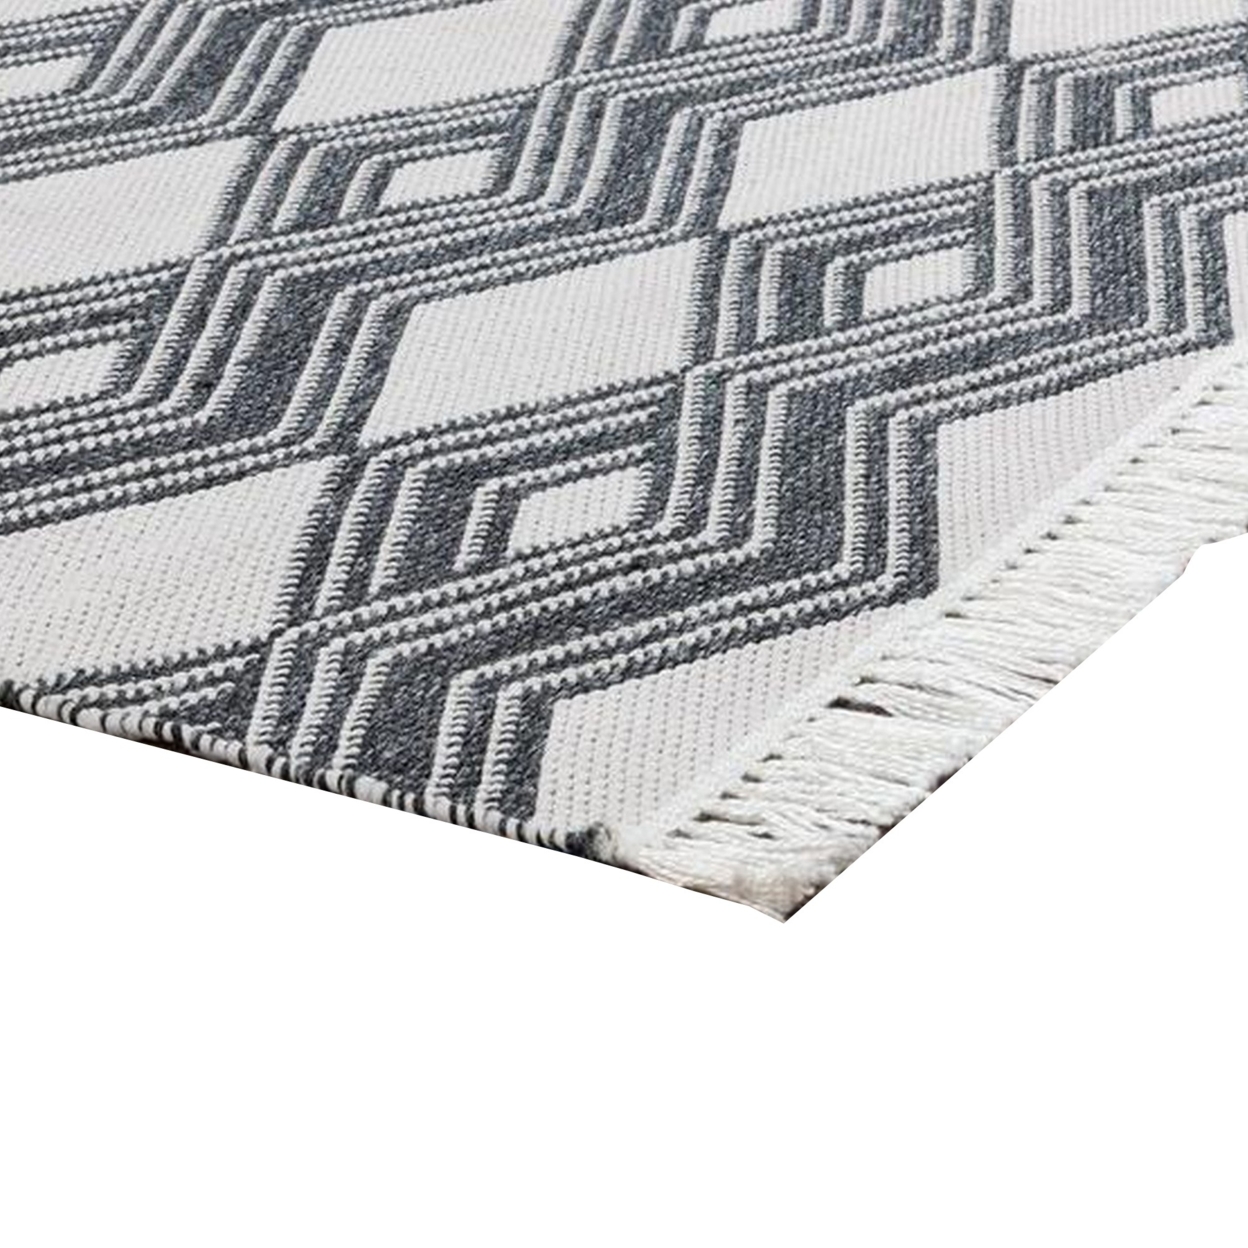 Maya 5 X 8 Indoor Outdoor Charcoal Gray Area Rug, Handwoven Diamond Pattern- Saltoro Sherpi